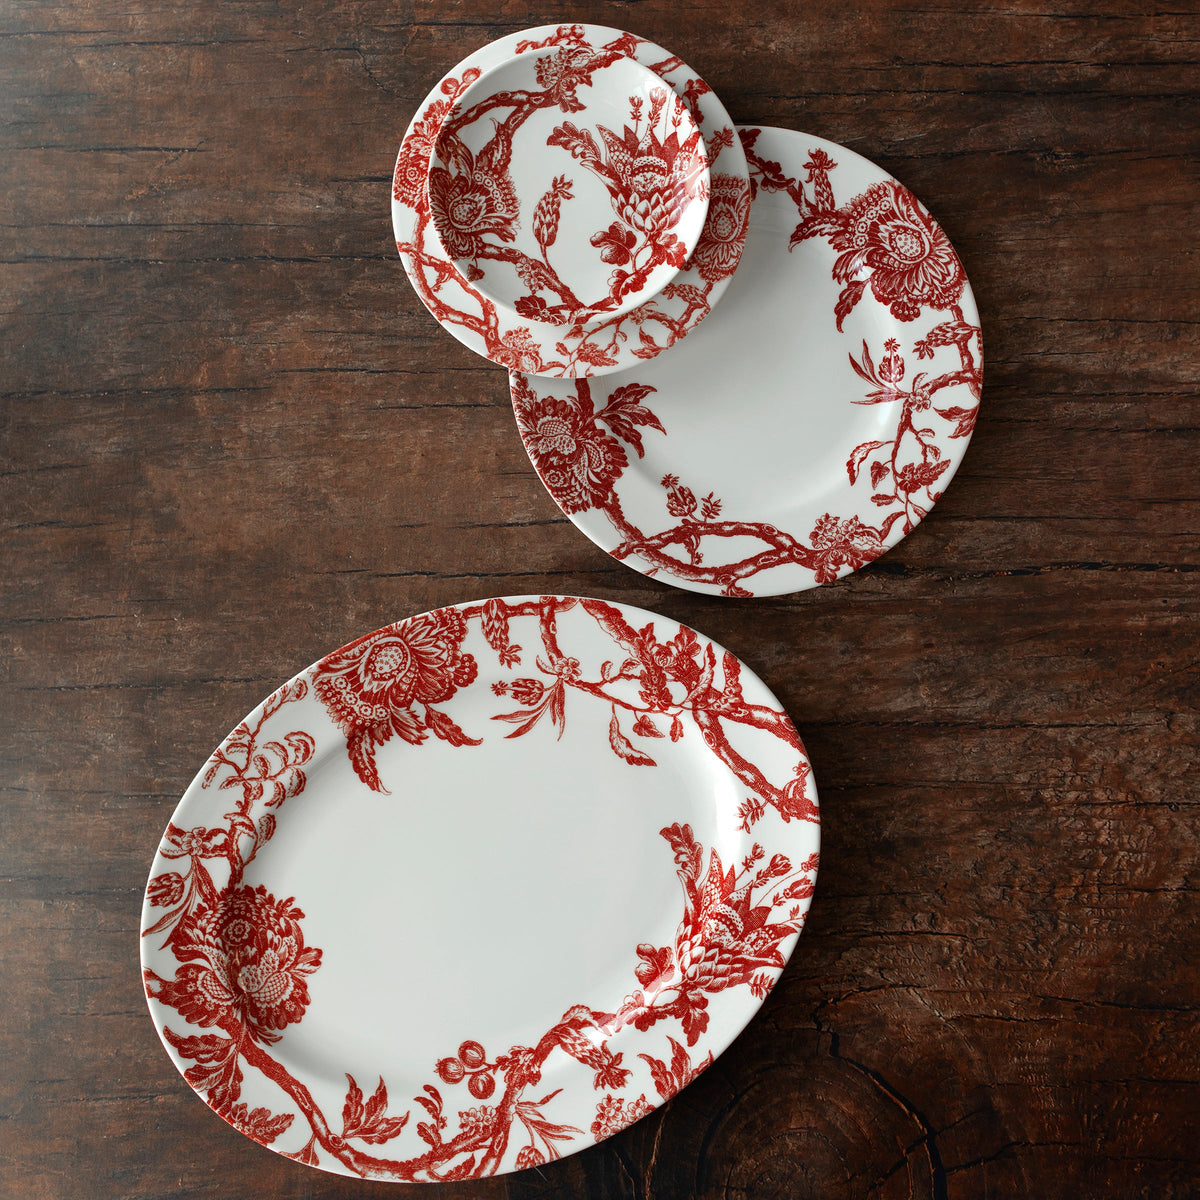 Three Arcadia Crimson Rimmed Dinner Plates by Caskata Artisanal Home on a wooden table.